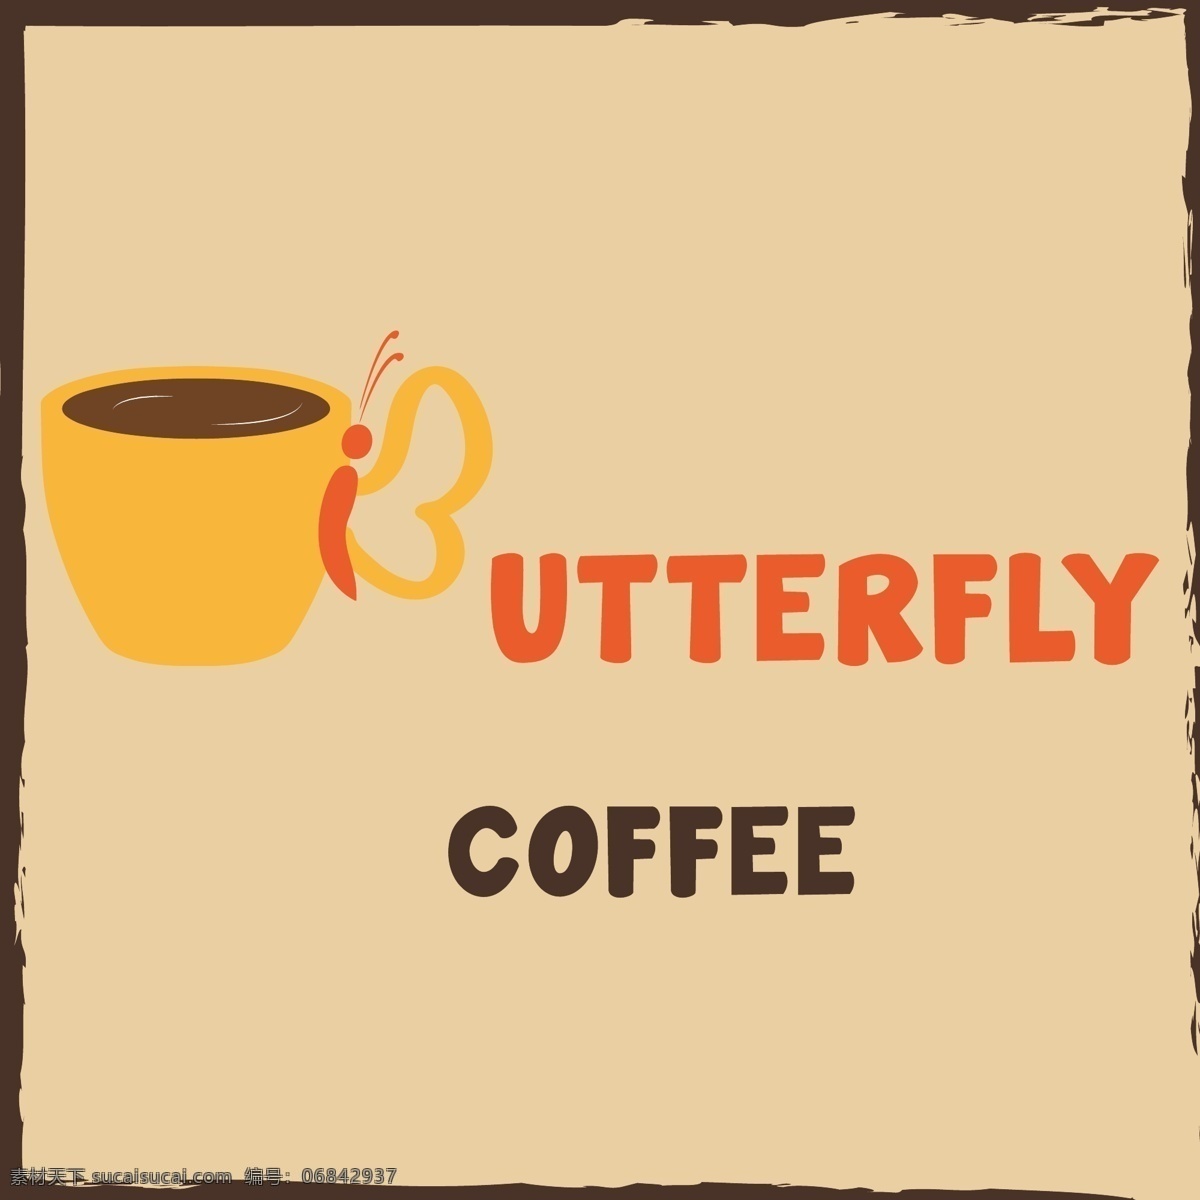 butterfly coffee logo vi设计 蝴蝶 咖啡 咖啡杯 咖啡店 矢量 模板下载